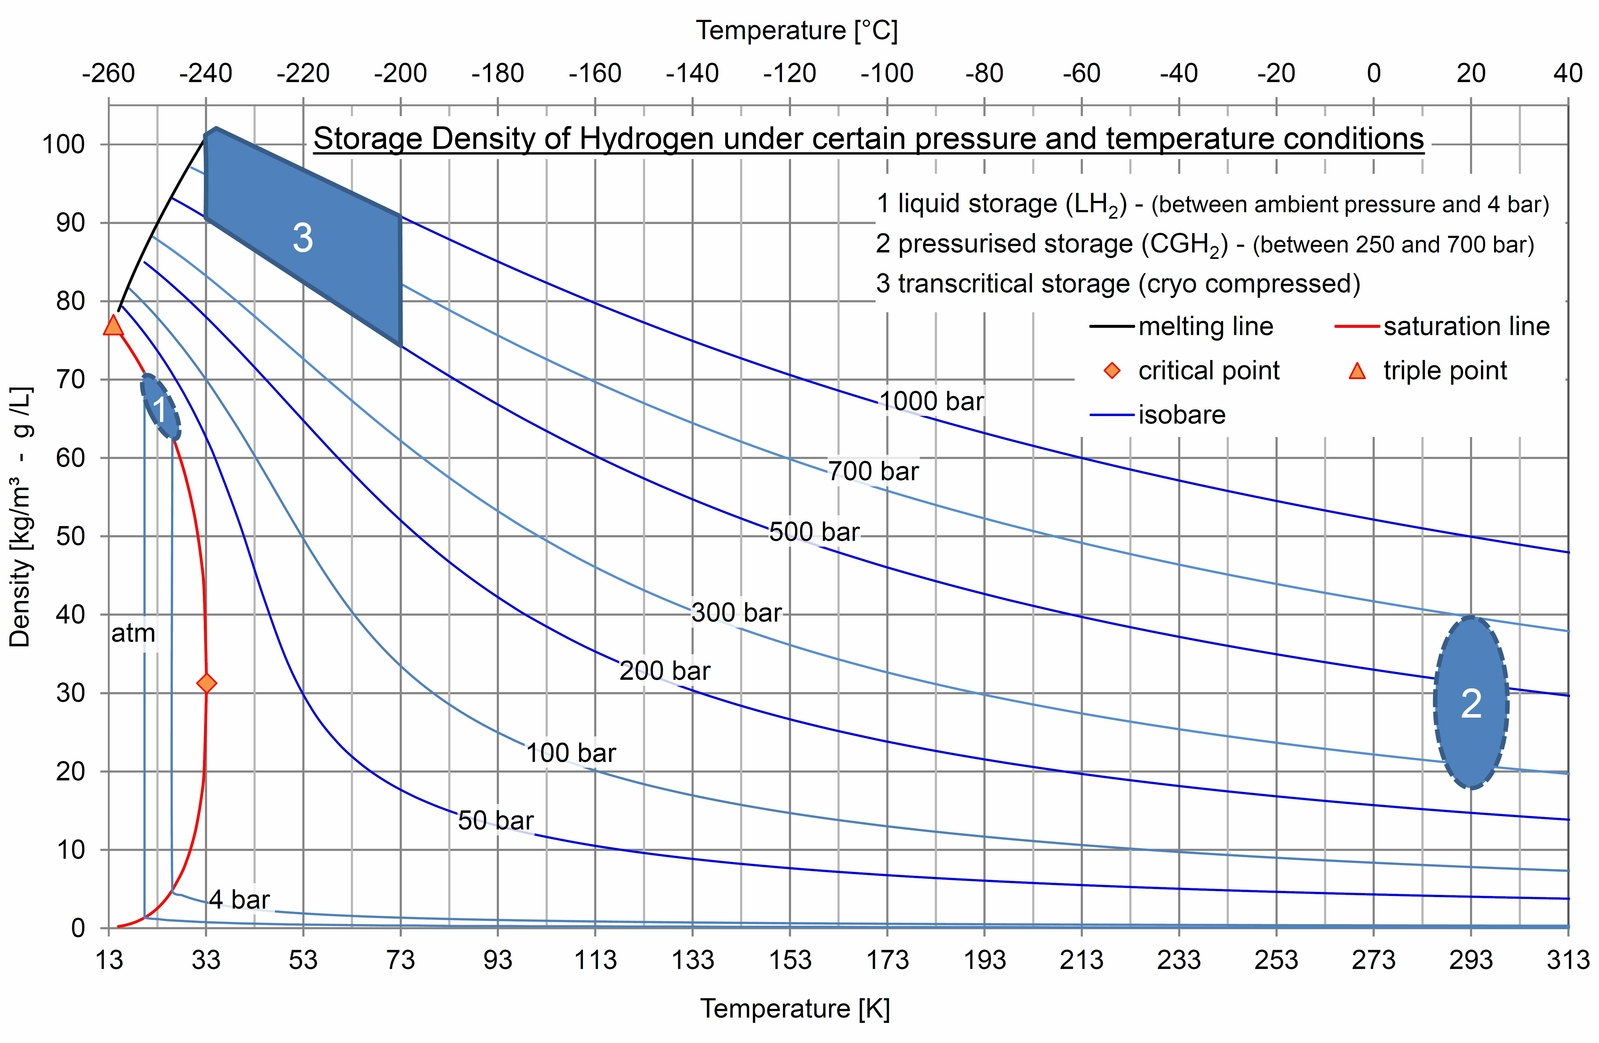 Figure 2: Net Storage Density of Hydrogen under certain pressure and tempeature conditions